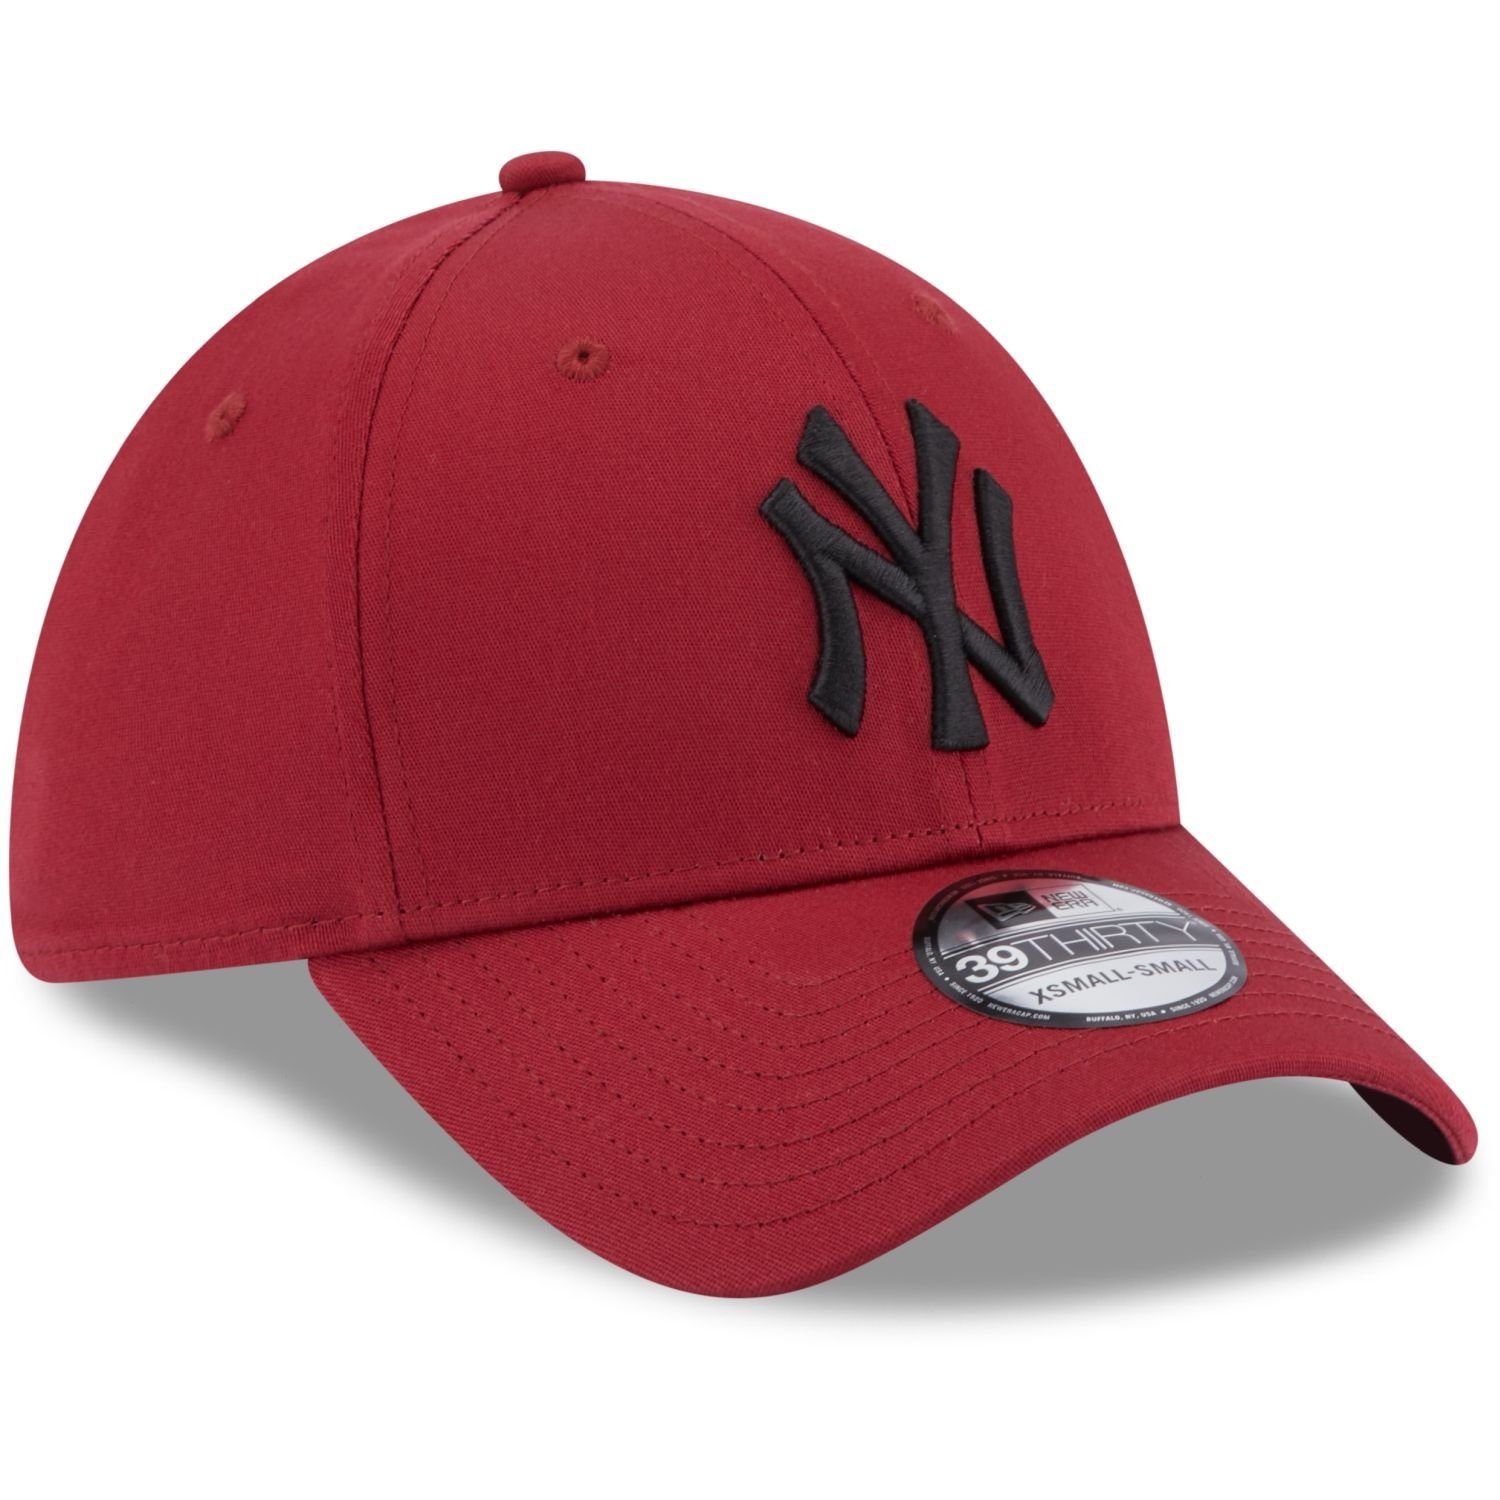 Cap New Flex Yankees New York Era Stretch cardinal 39Thirty